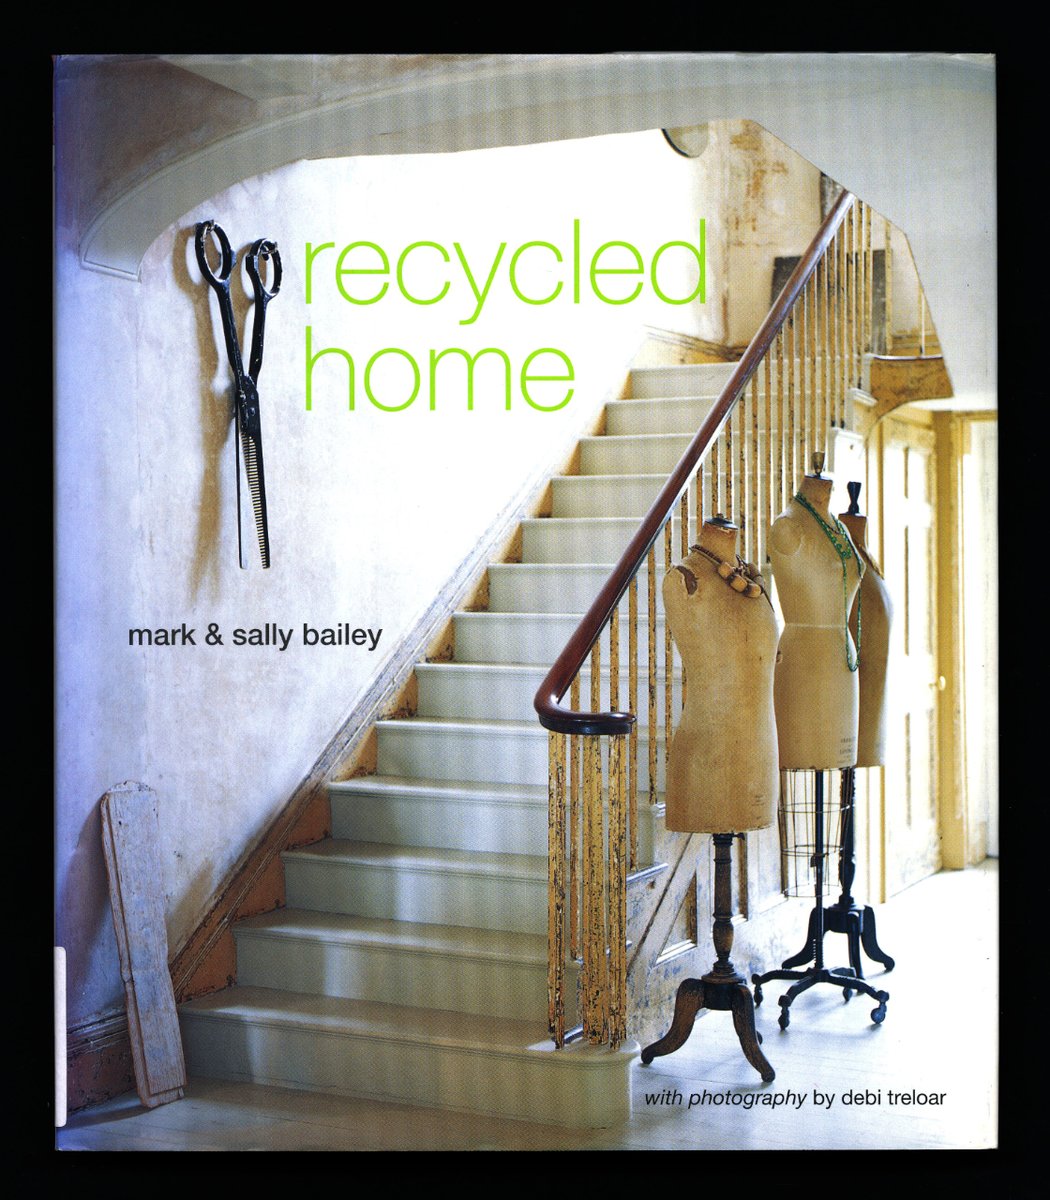 Dels nostres #llibresdedisseny:

📗'Recycled home'
#MarkBailey #SallyBailey (@RylandPeters, 2007)

#librosdediseño #designbooks #interiorisme #interiorismo #interiordesign #reciclatge #reciclaje #recycling